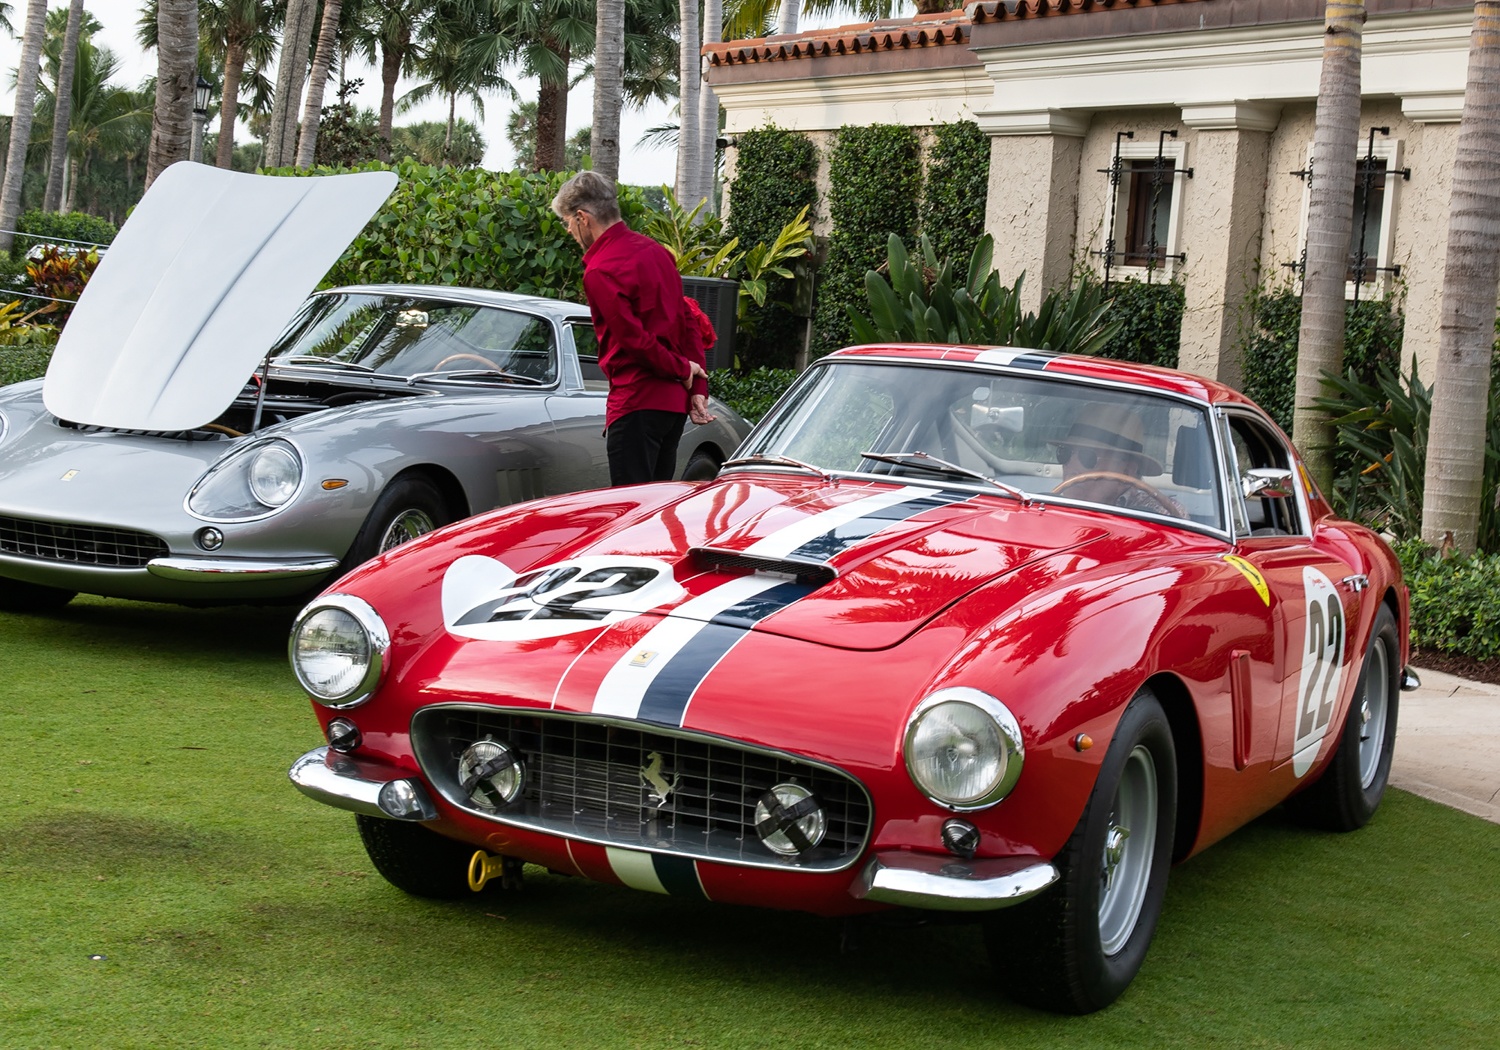 1960 Ferrari GT SWB Berlinetta ser# 2291 GT1967 Ferrari 275 GTB/4 ser# 10533 Chuck Andersen